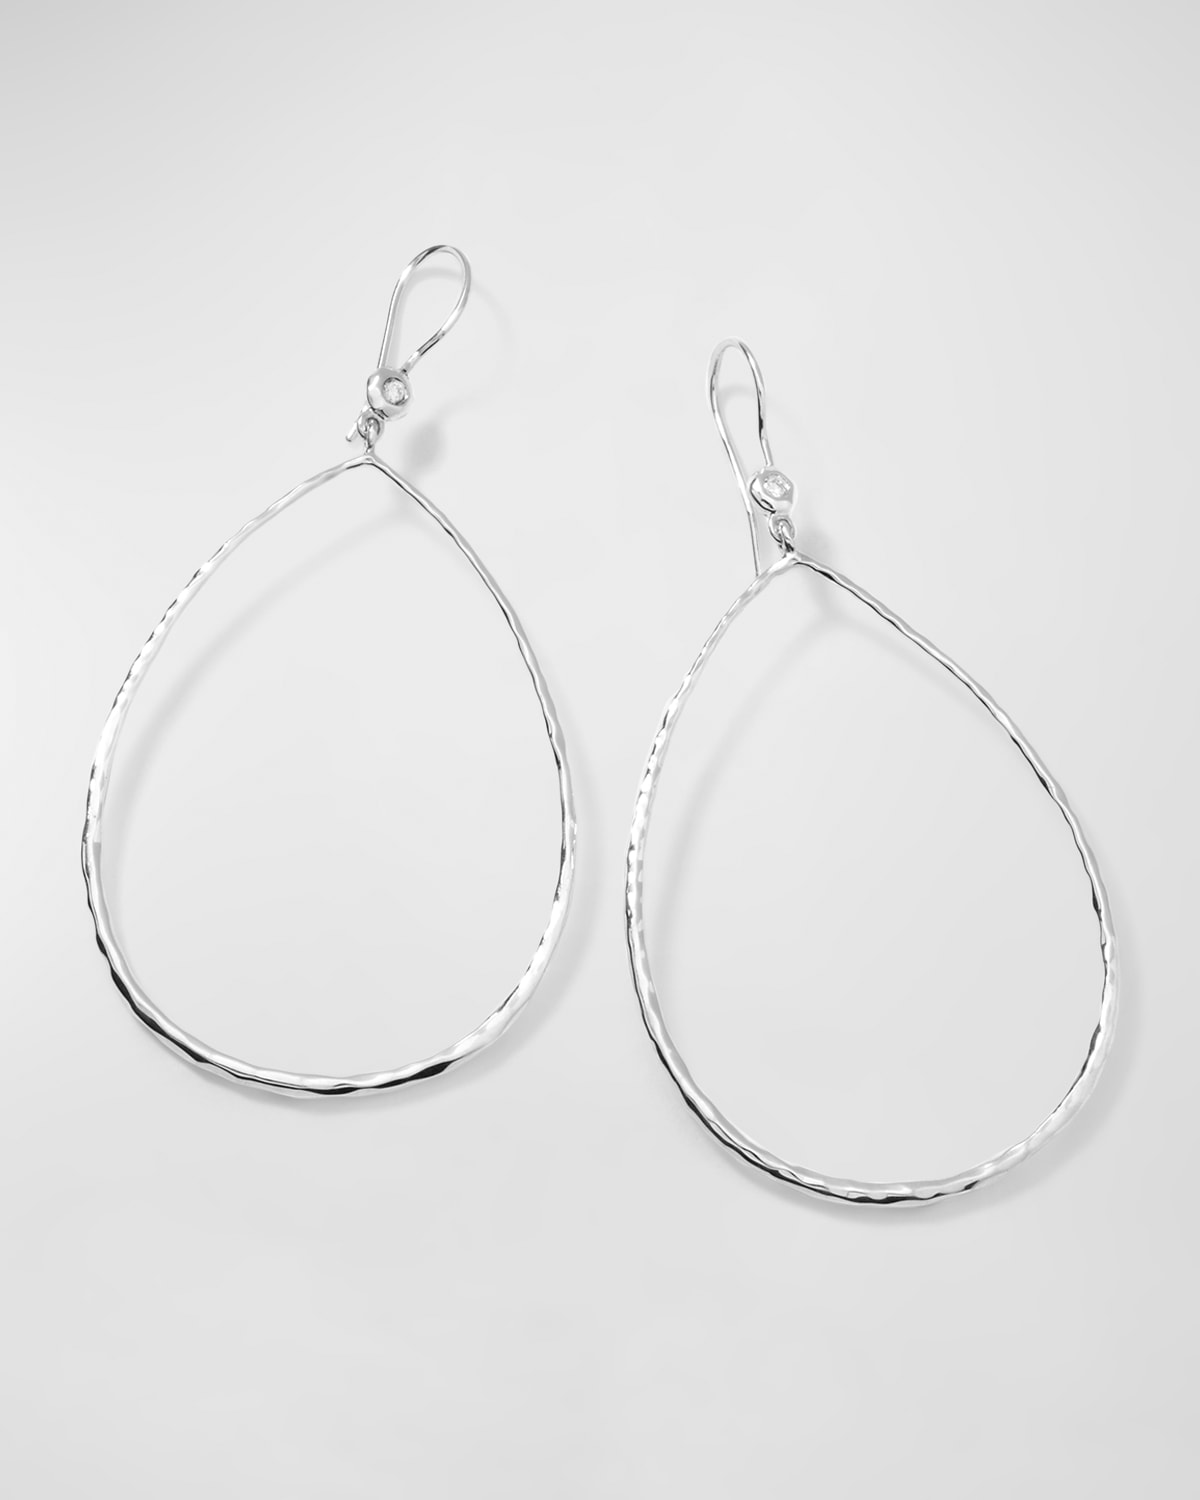 Hammered Teardrop Earrings in Sterling Silver with Diamonds